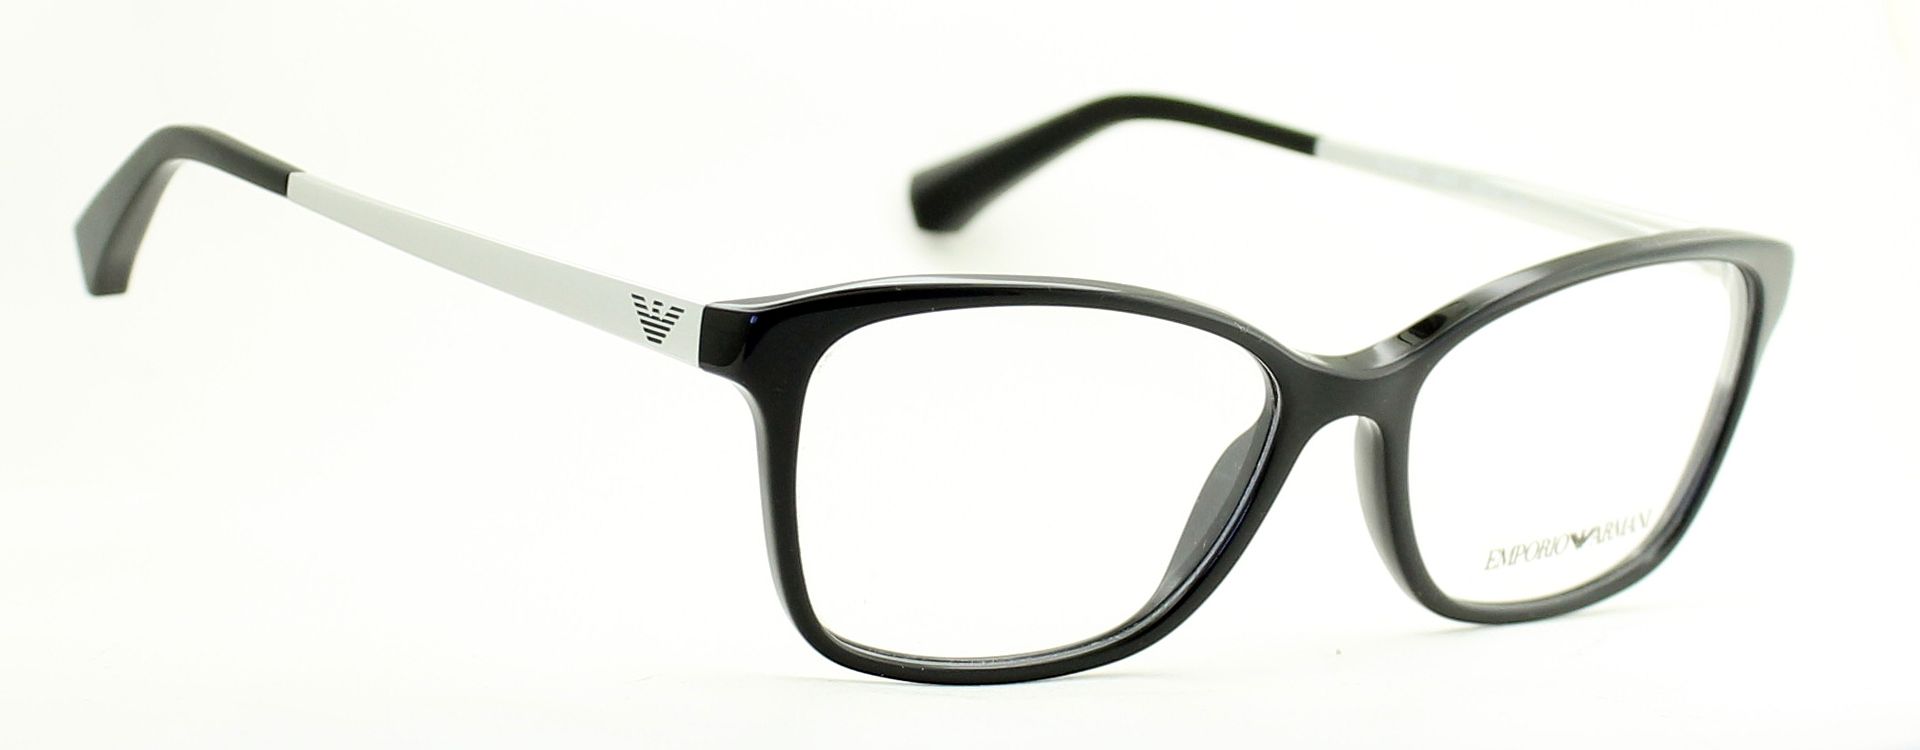 EMPORIO ARMANI EA3026 5017 52mm Eyewear FRAMES RX Optical Glasses